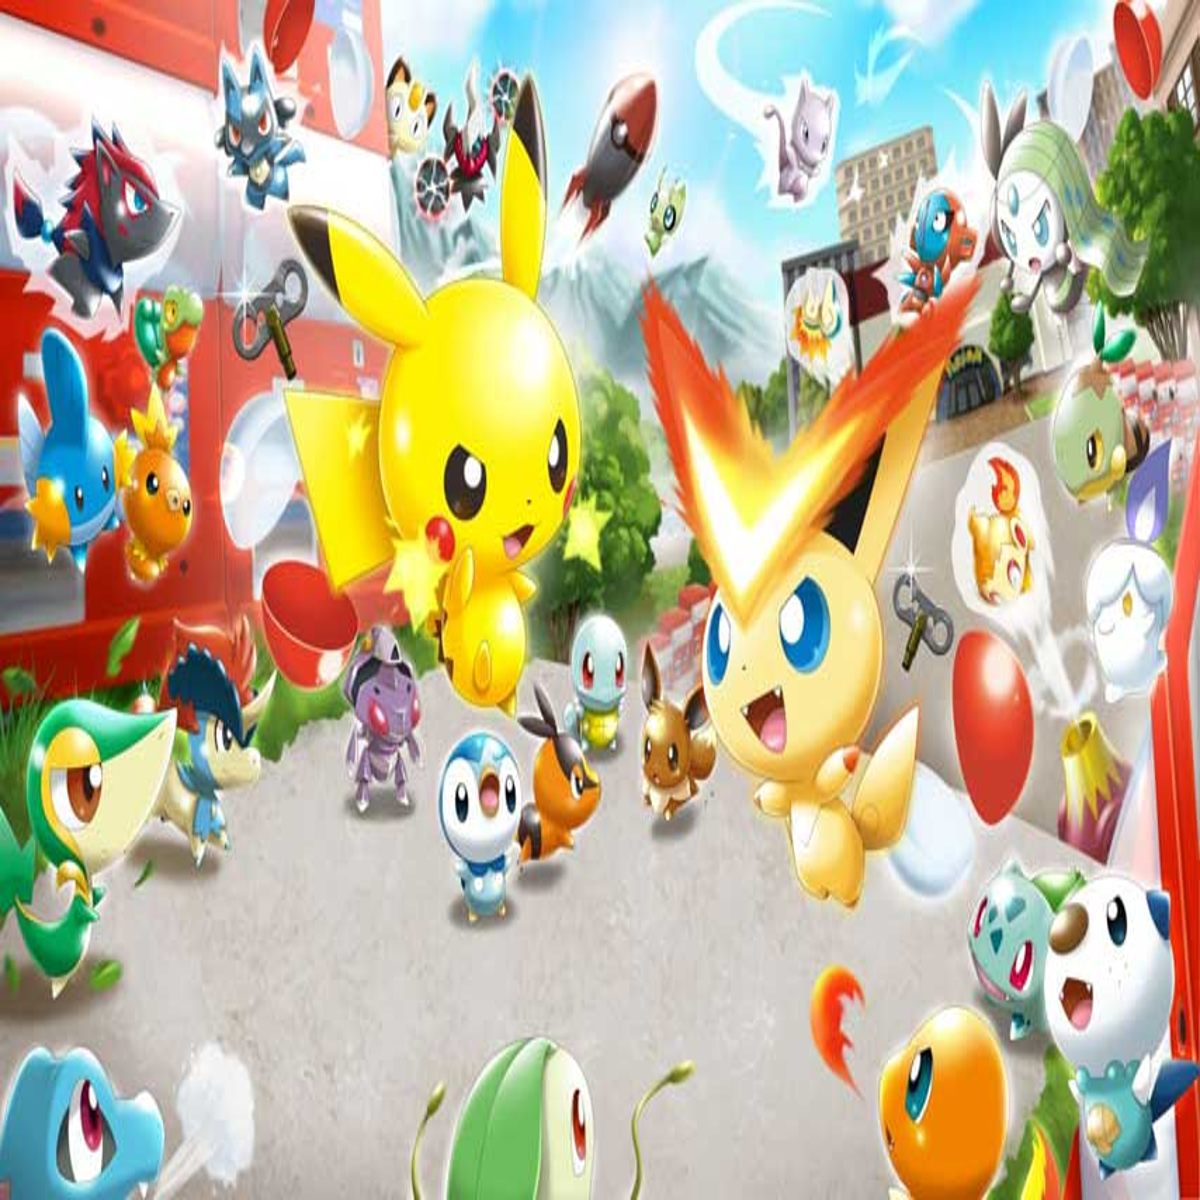 Phione - #489 - Pokémon Rumble World 